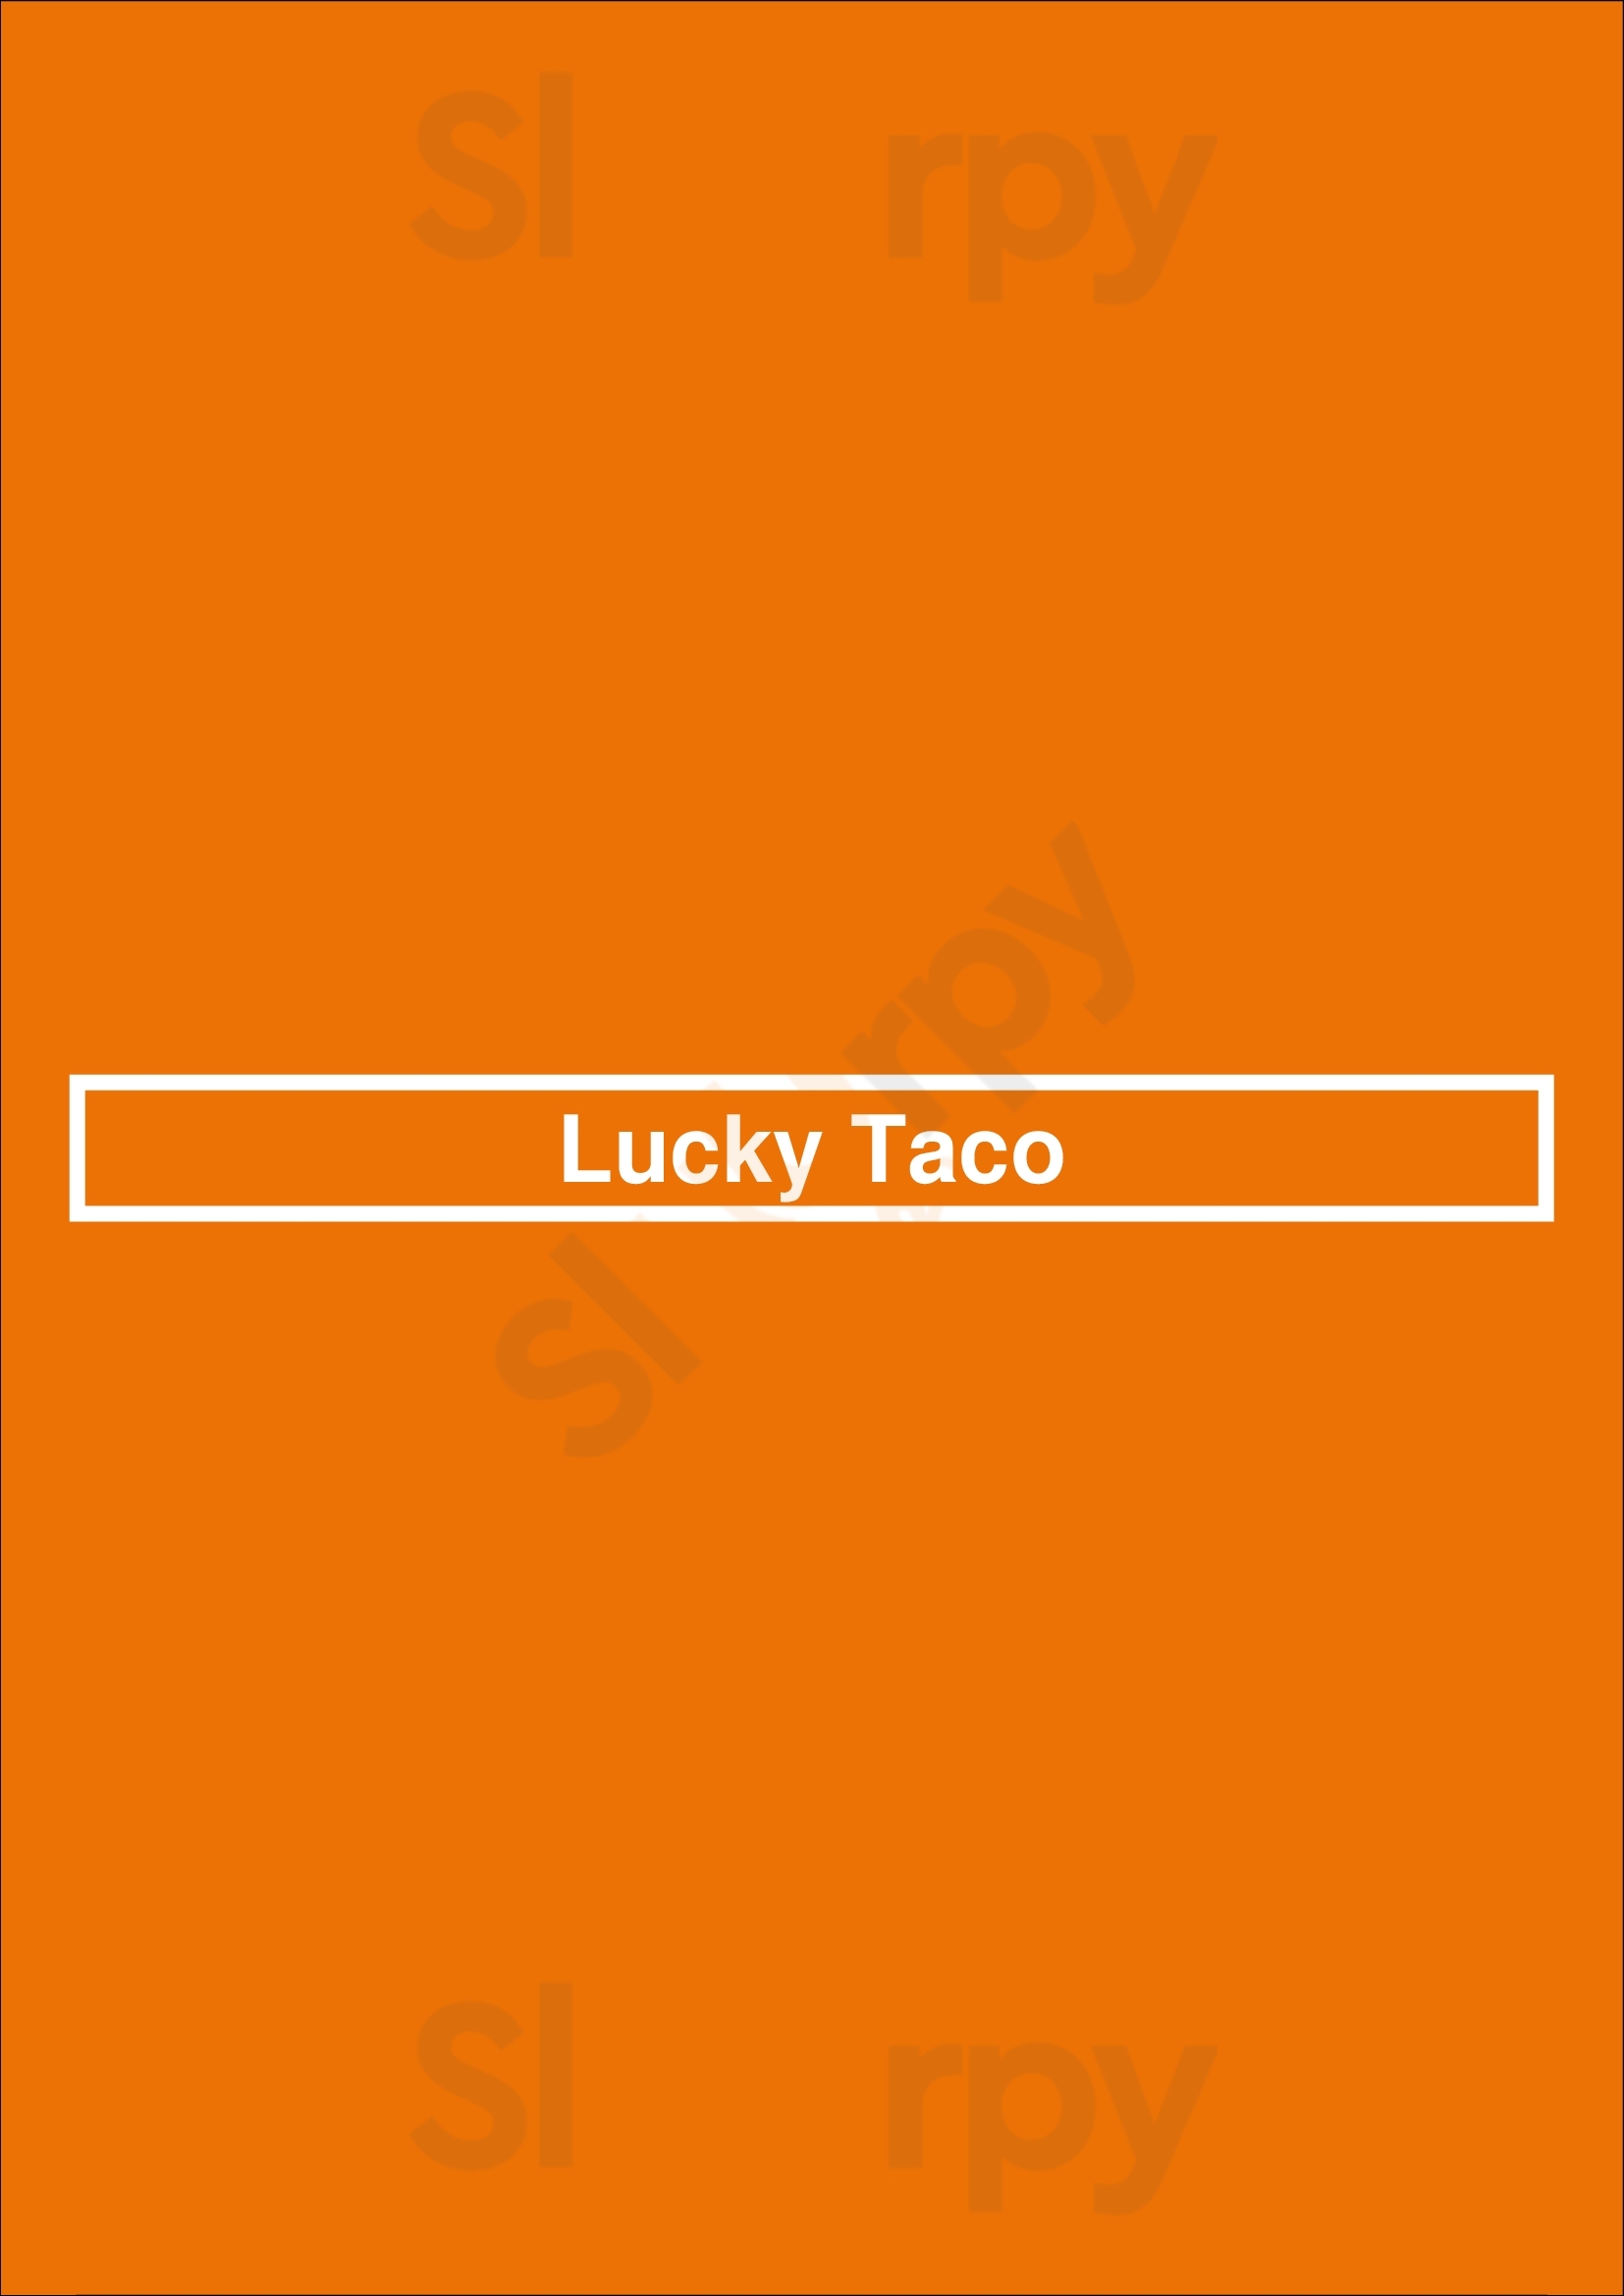 Lucky Taco Vancouver Menu - 1